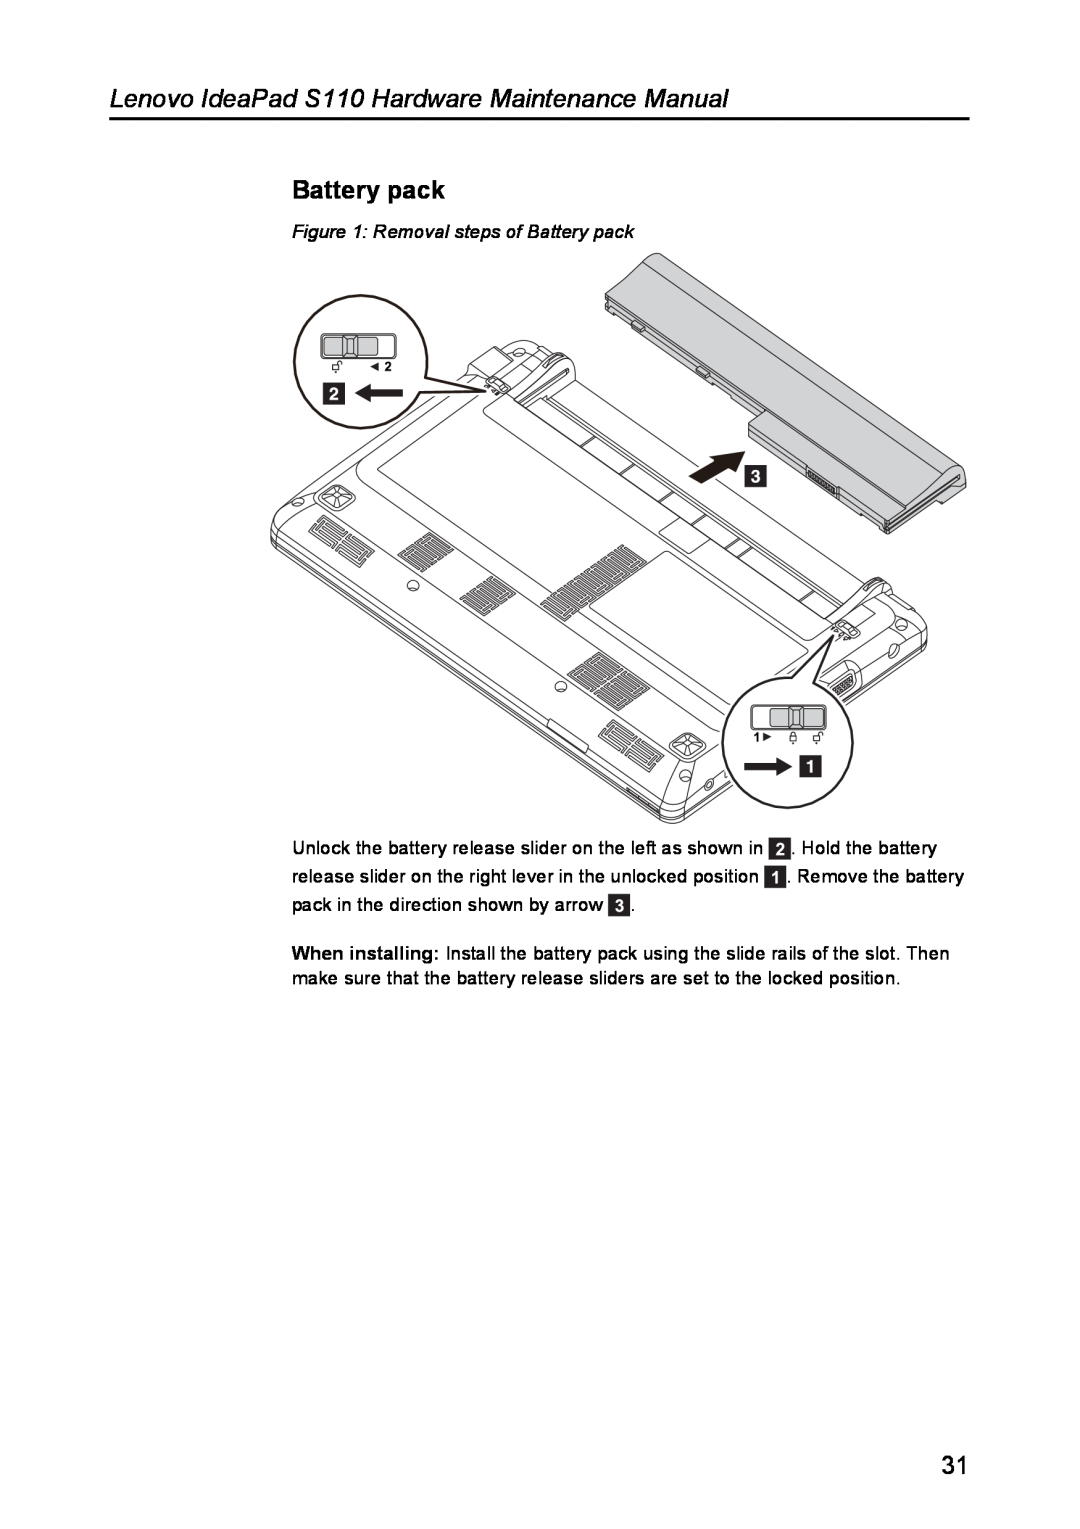 Lenovo manual Removal steps of Battery pack, Lenovo IdeaPad S110 Hardware Maintenance Manual 